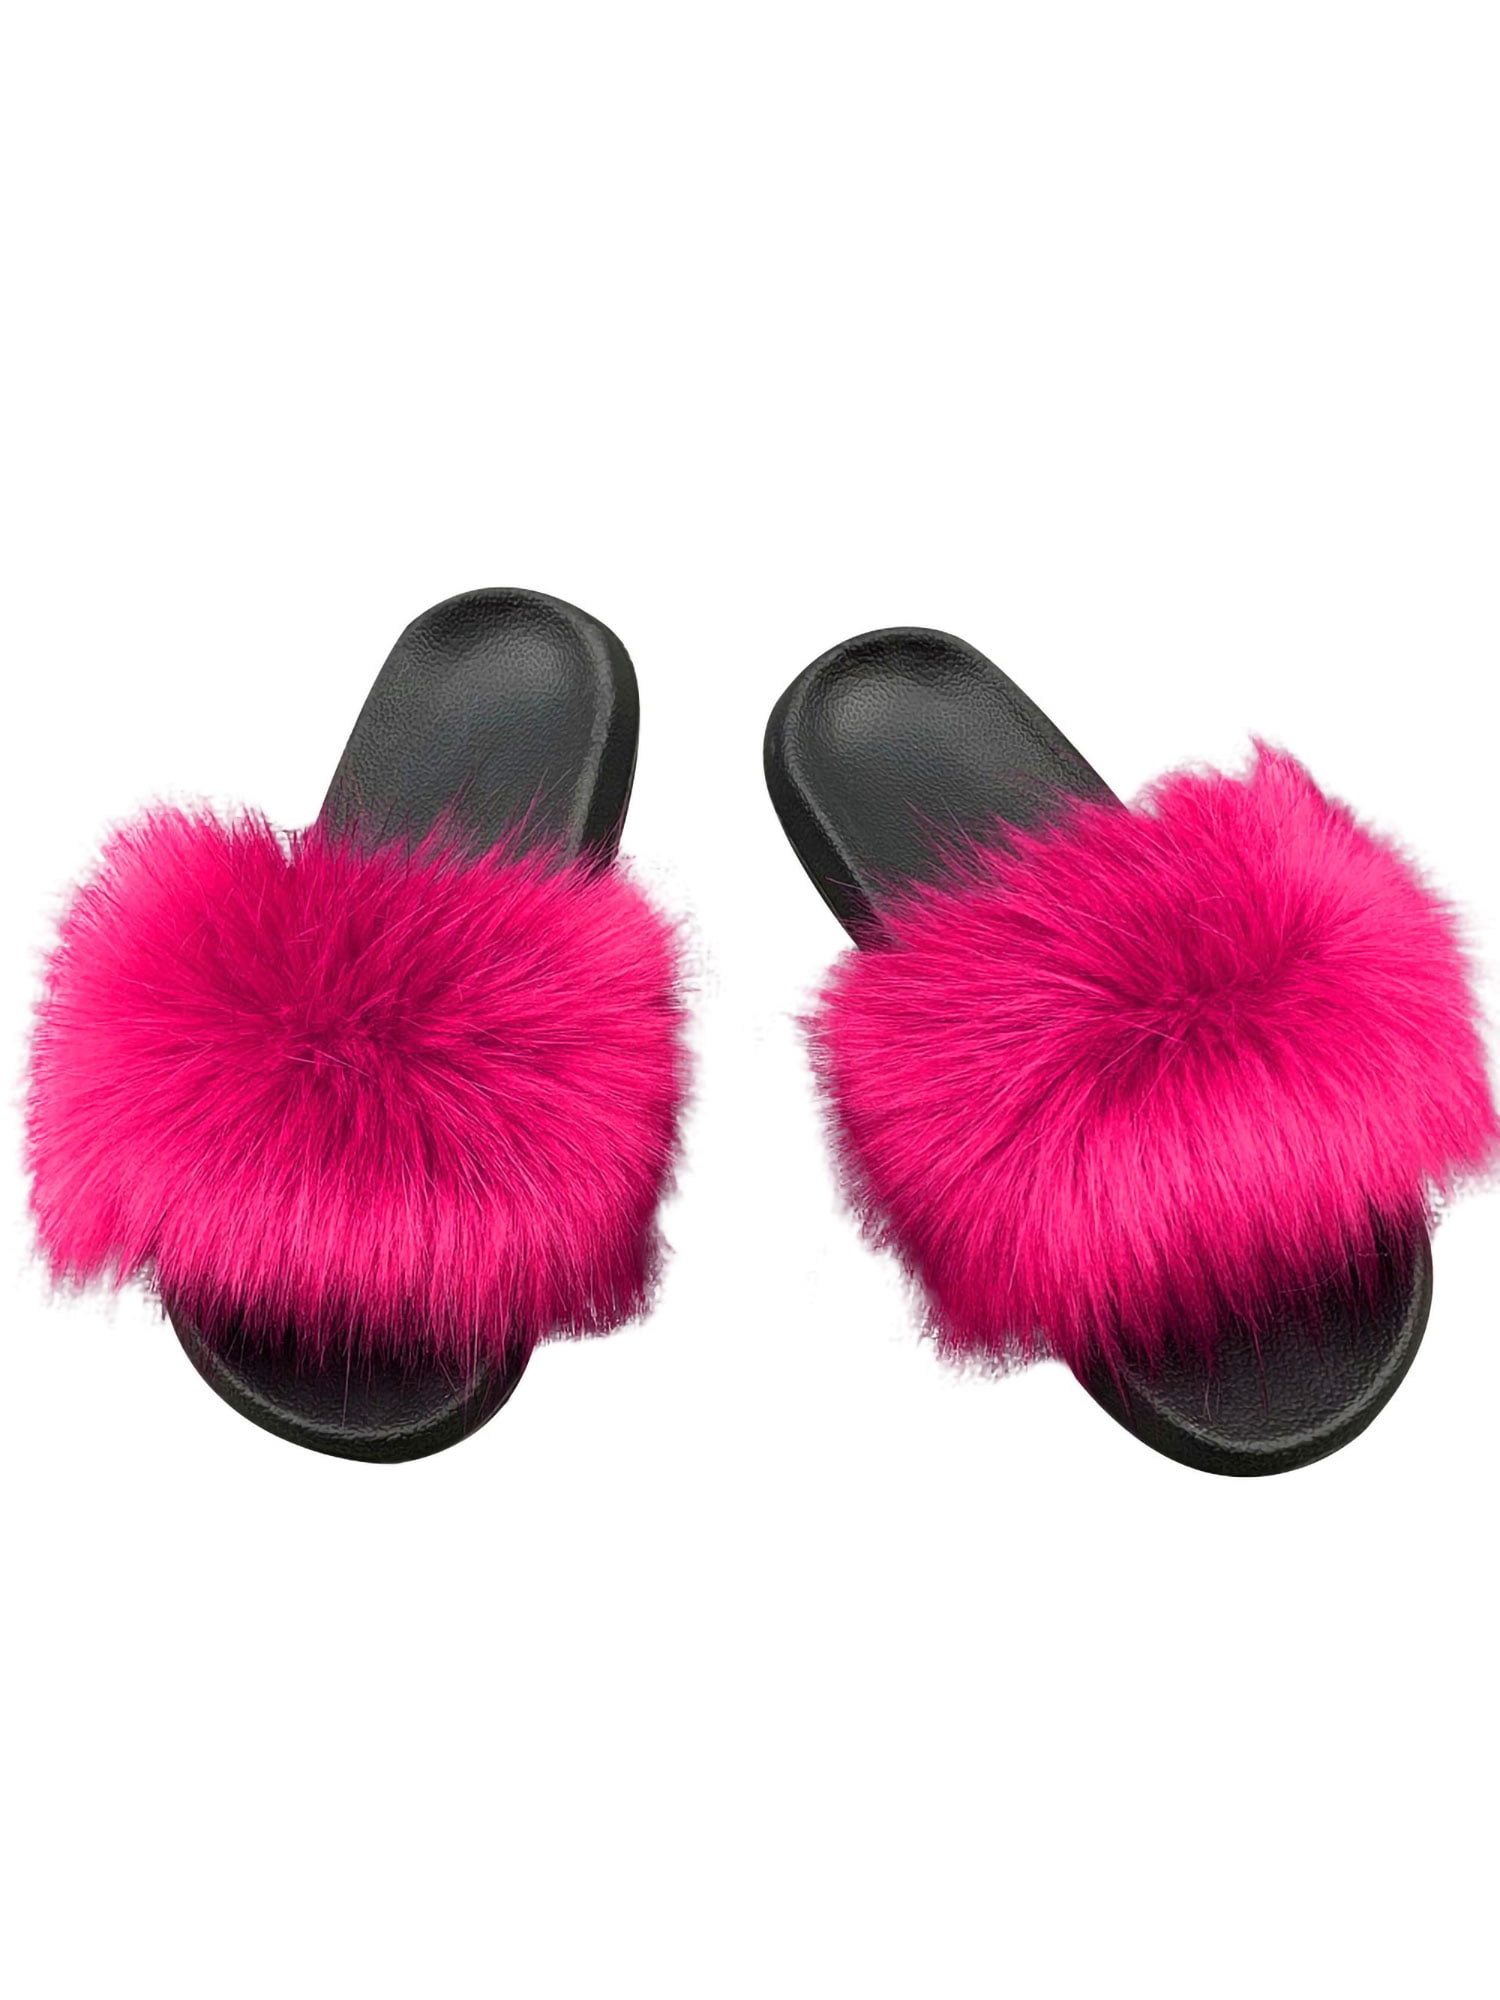 Women Flat Faux Fur Fluffy Sliders Slippers Sandals Flip Flop Slip On Shoes Size 